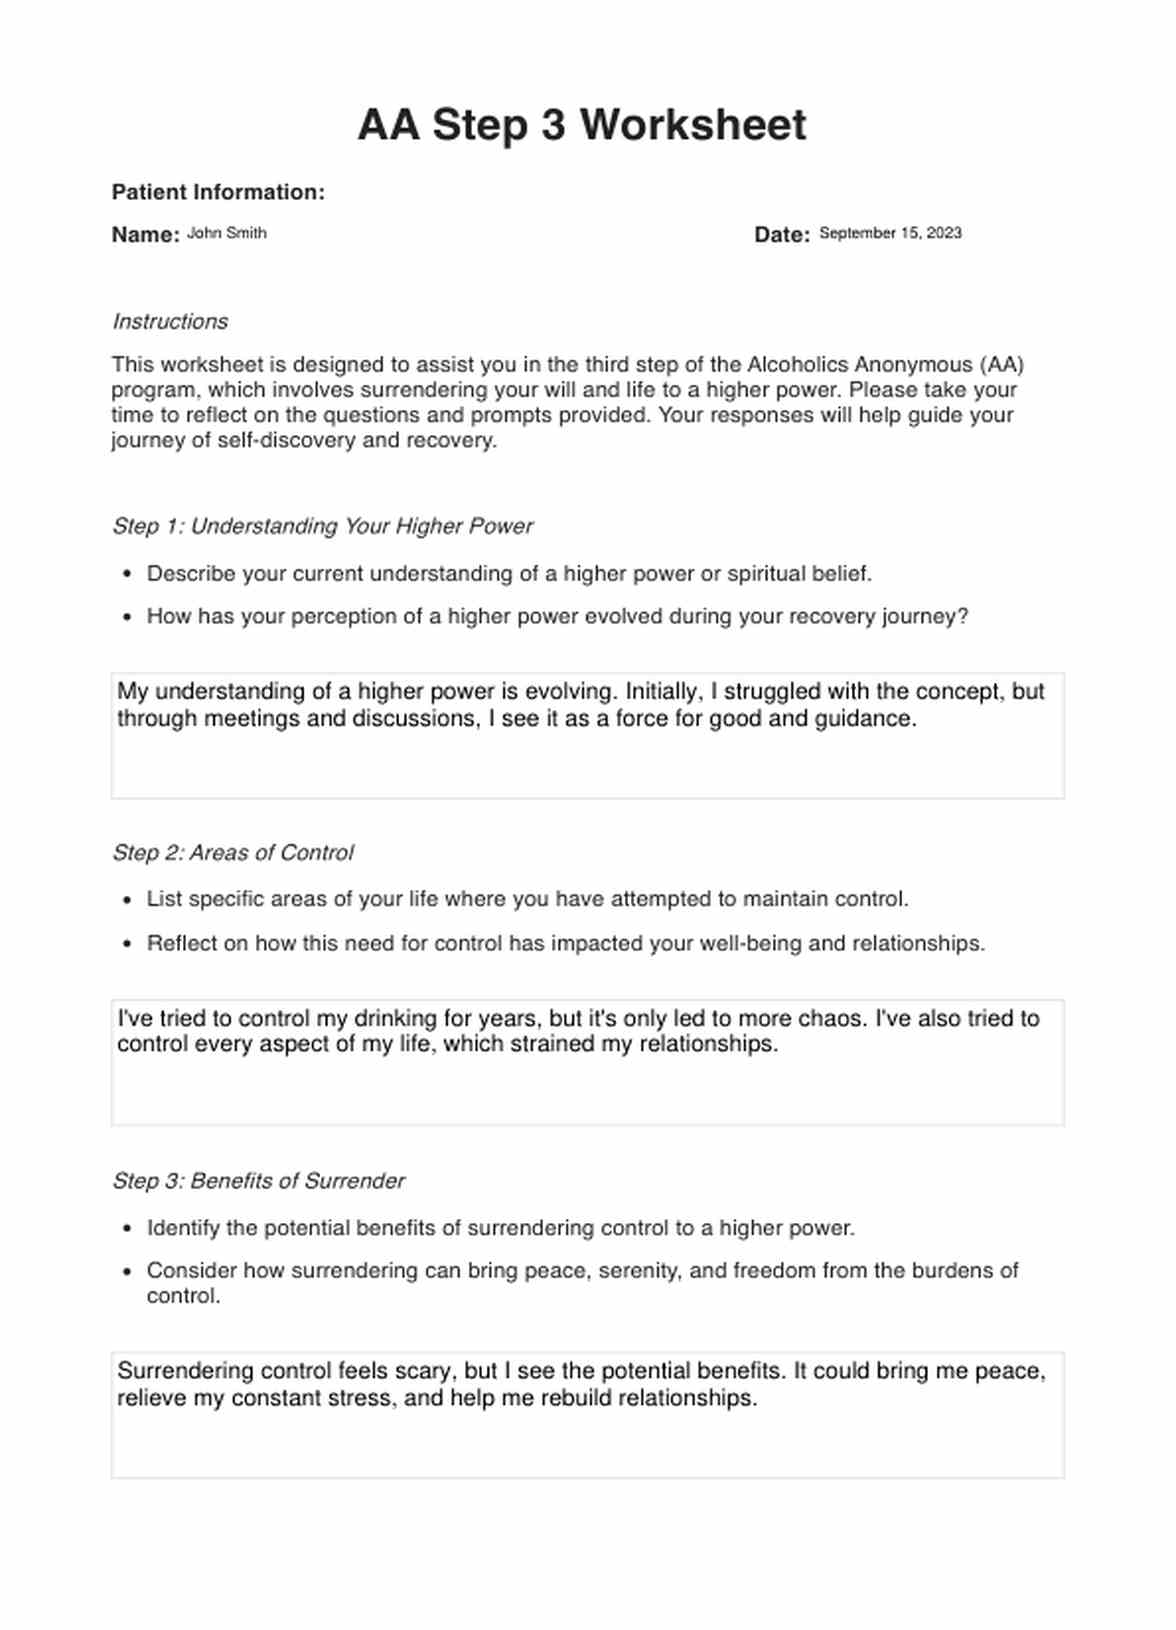 AA Step 3 Worksheets PDF Example